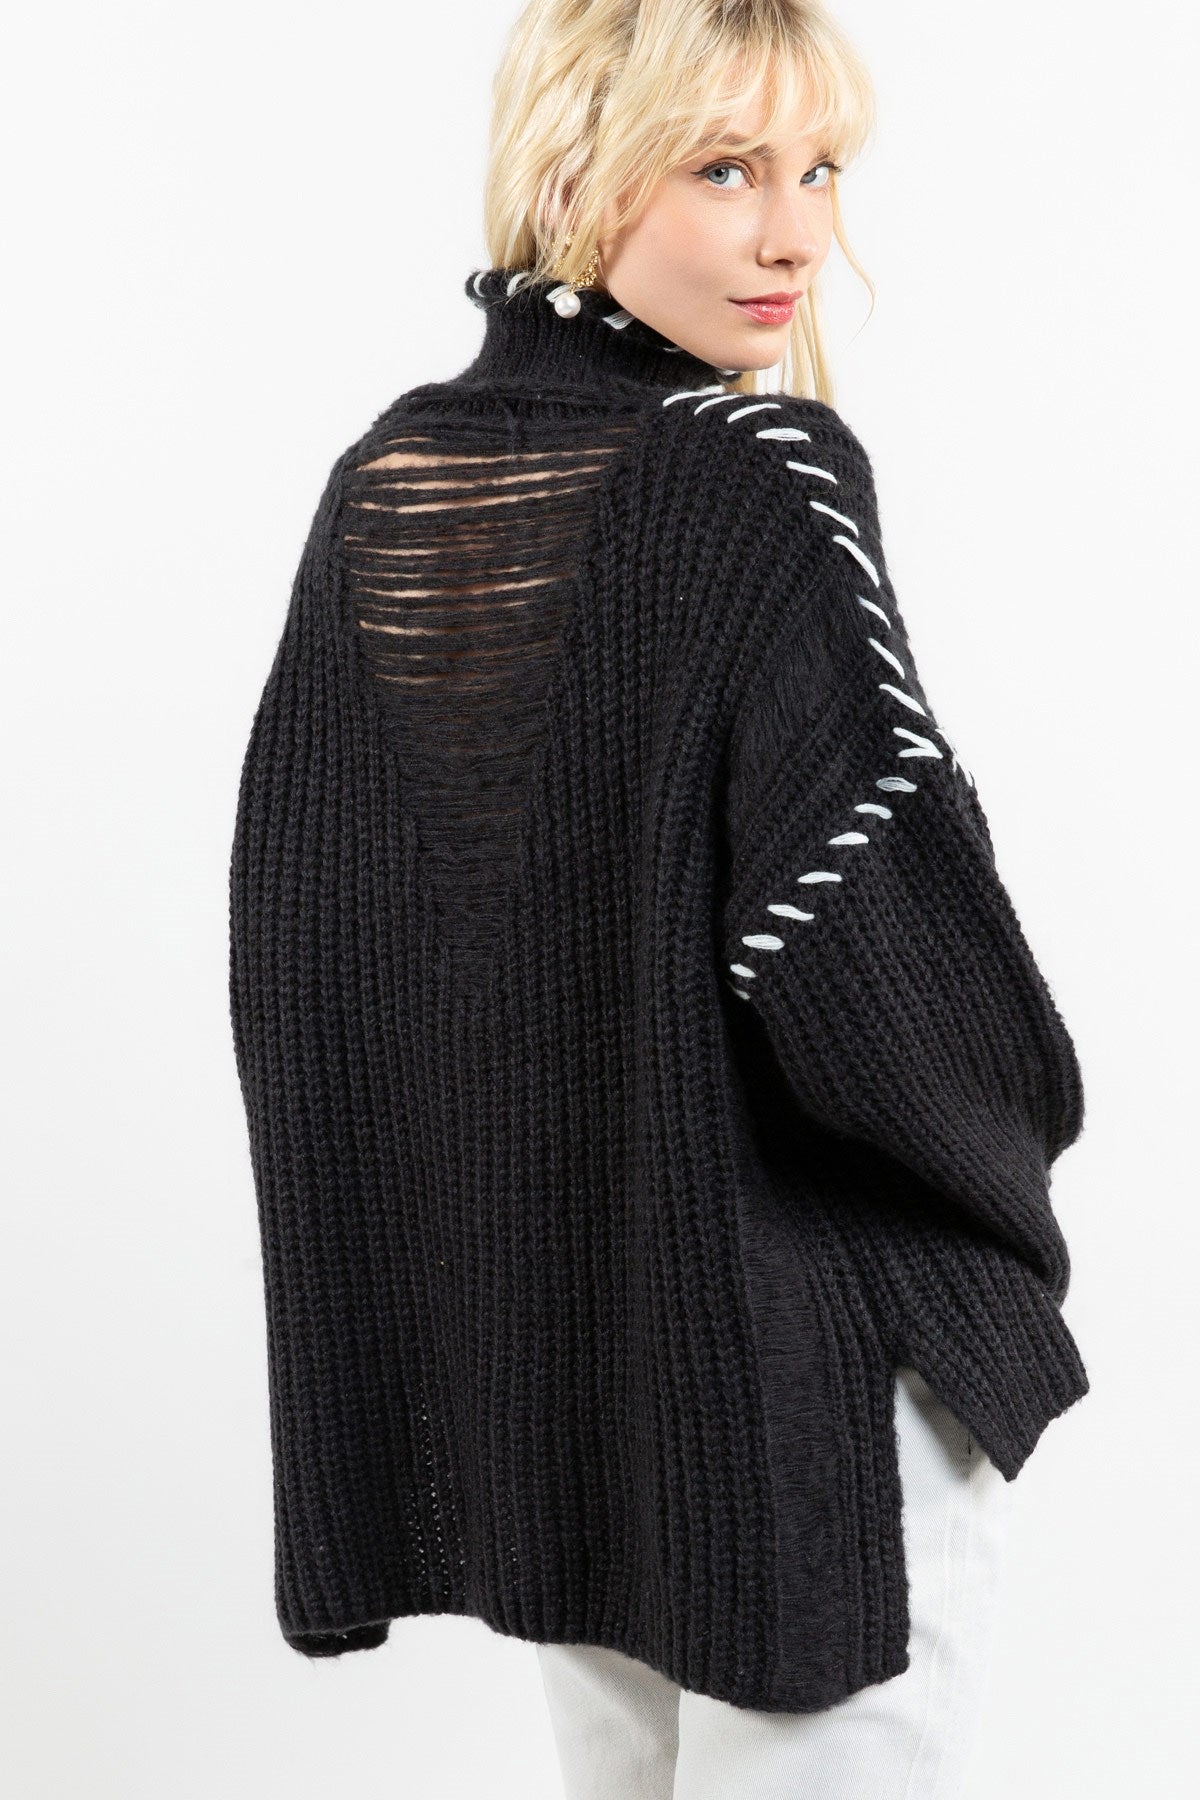 Black Turtleneck Oversized Sweater with White Stitching